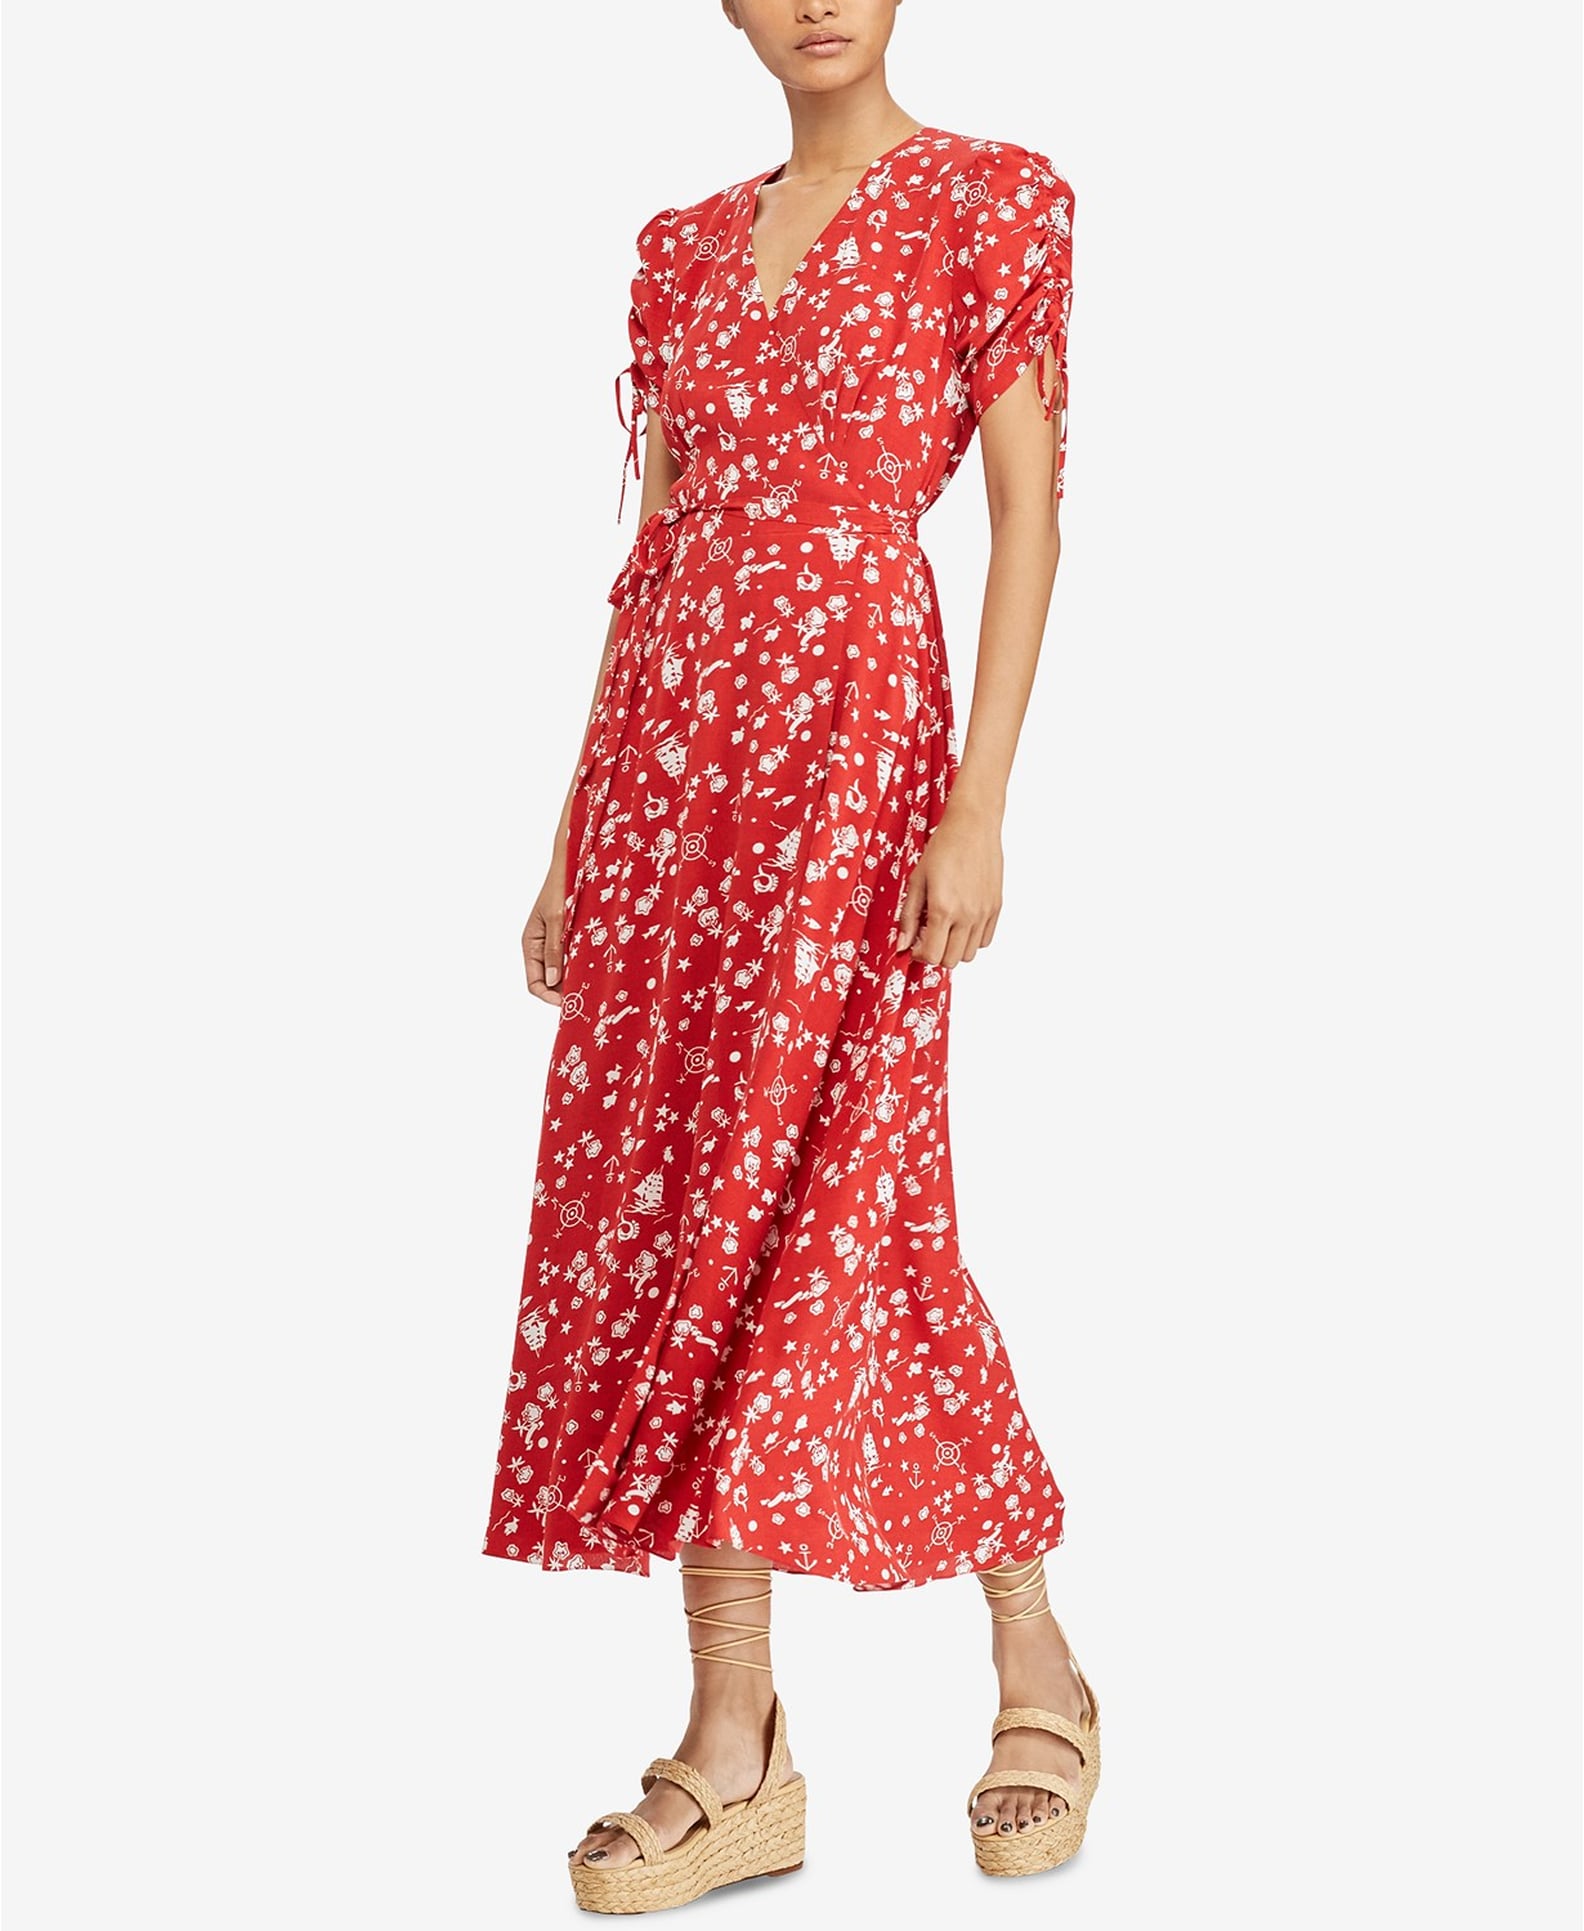 Pippa Middleton Red Ralph Lauren Dress | POPSUGAR Fashion